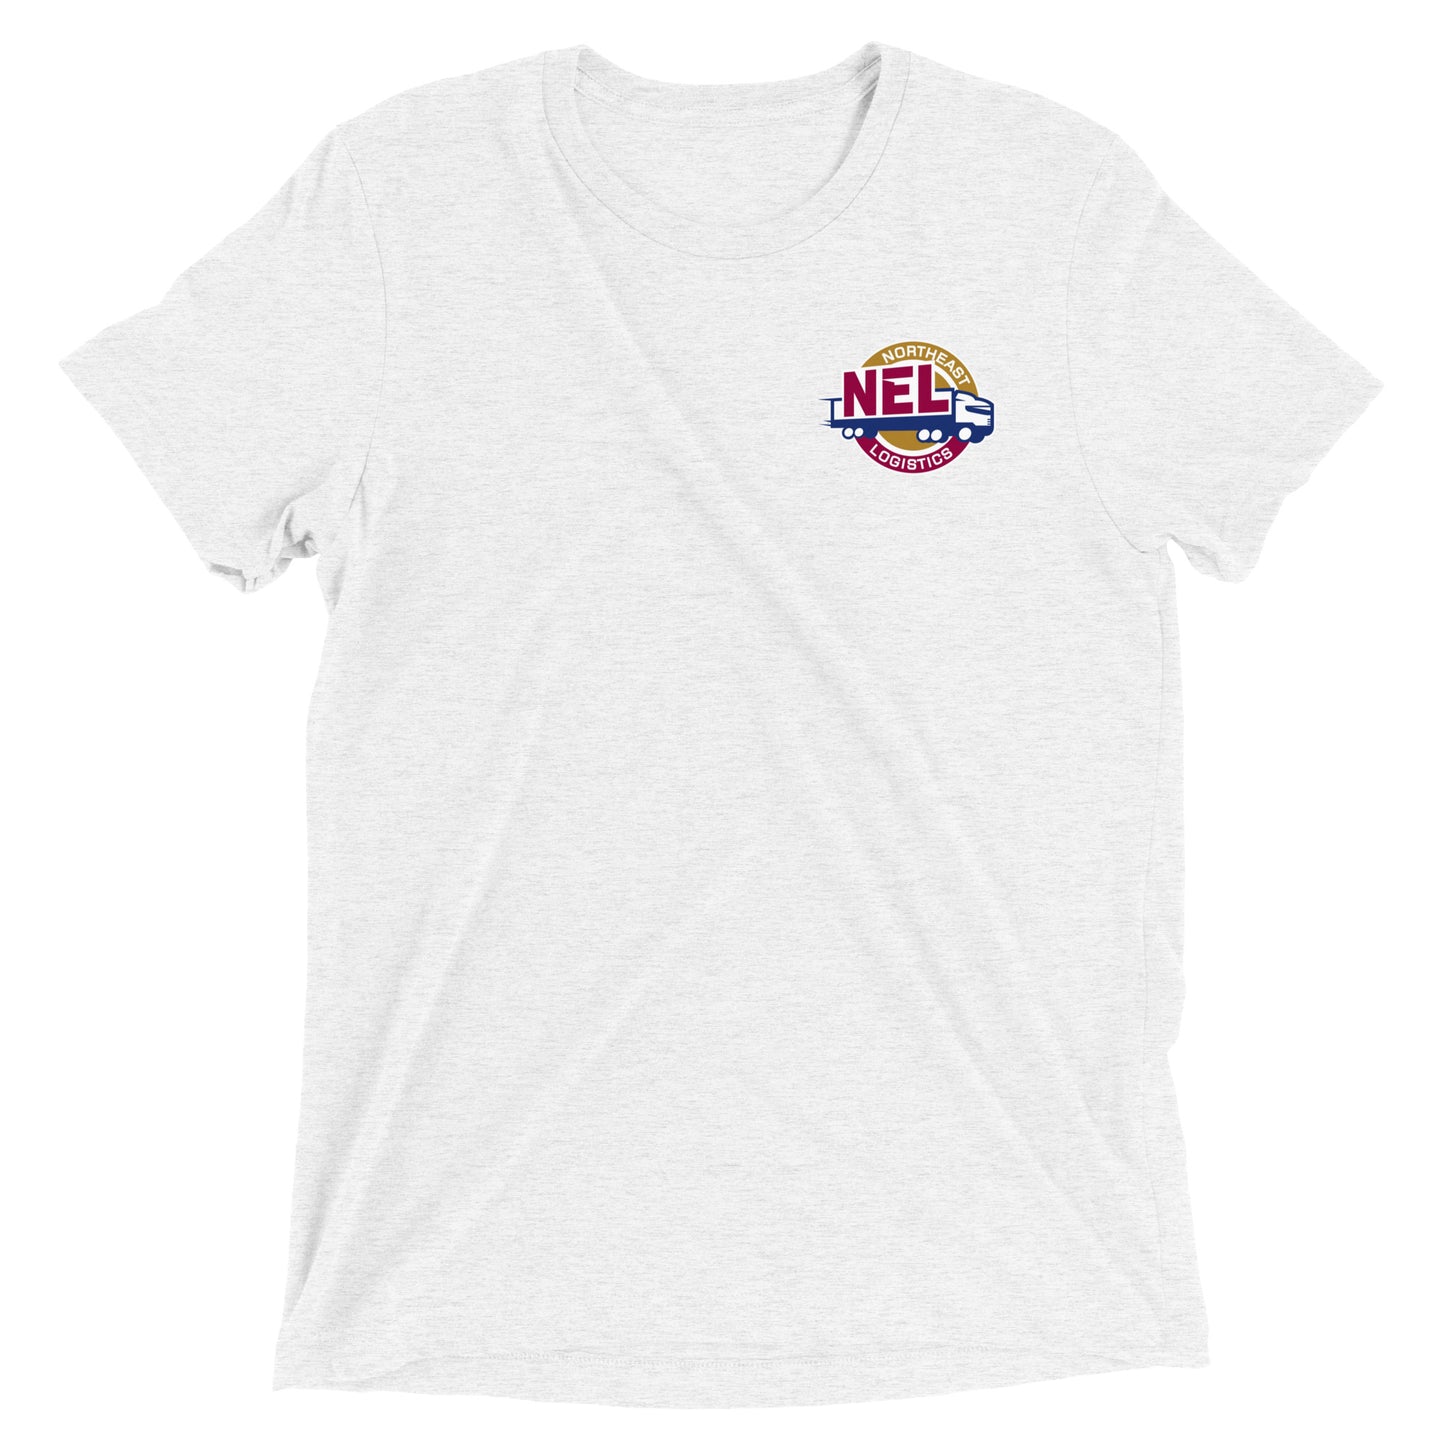 Extra-soft Triblend T-shirt - NEL